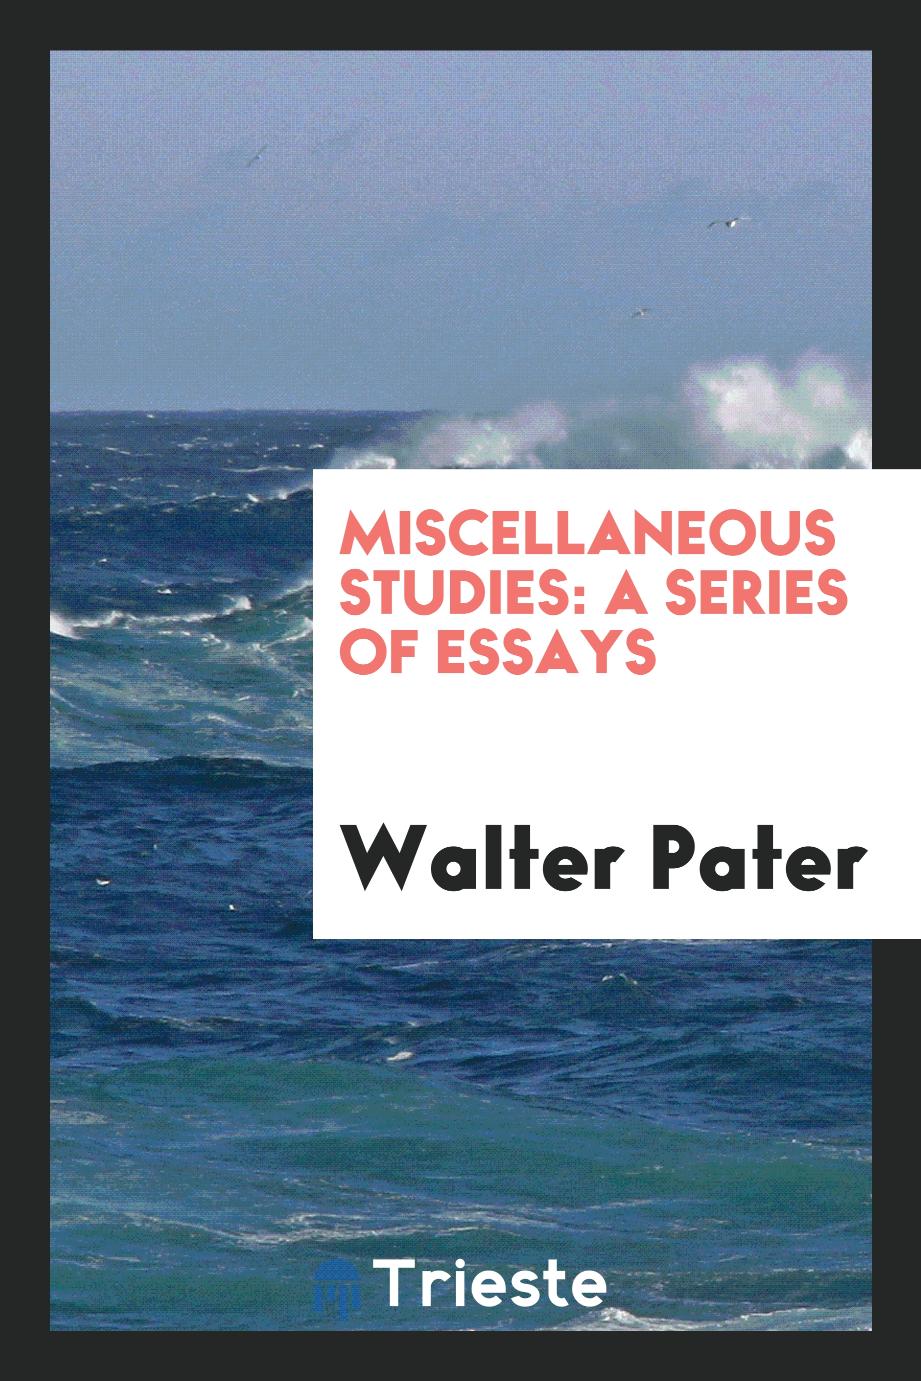 Miscellaneous studies: a series of essays